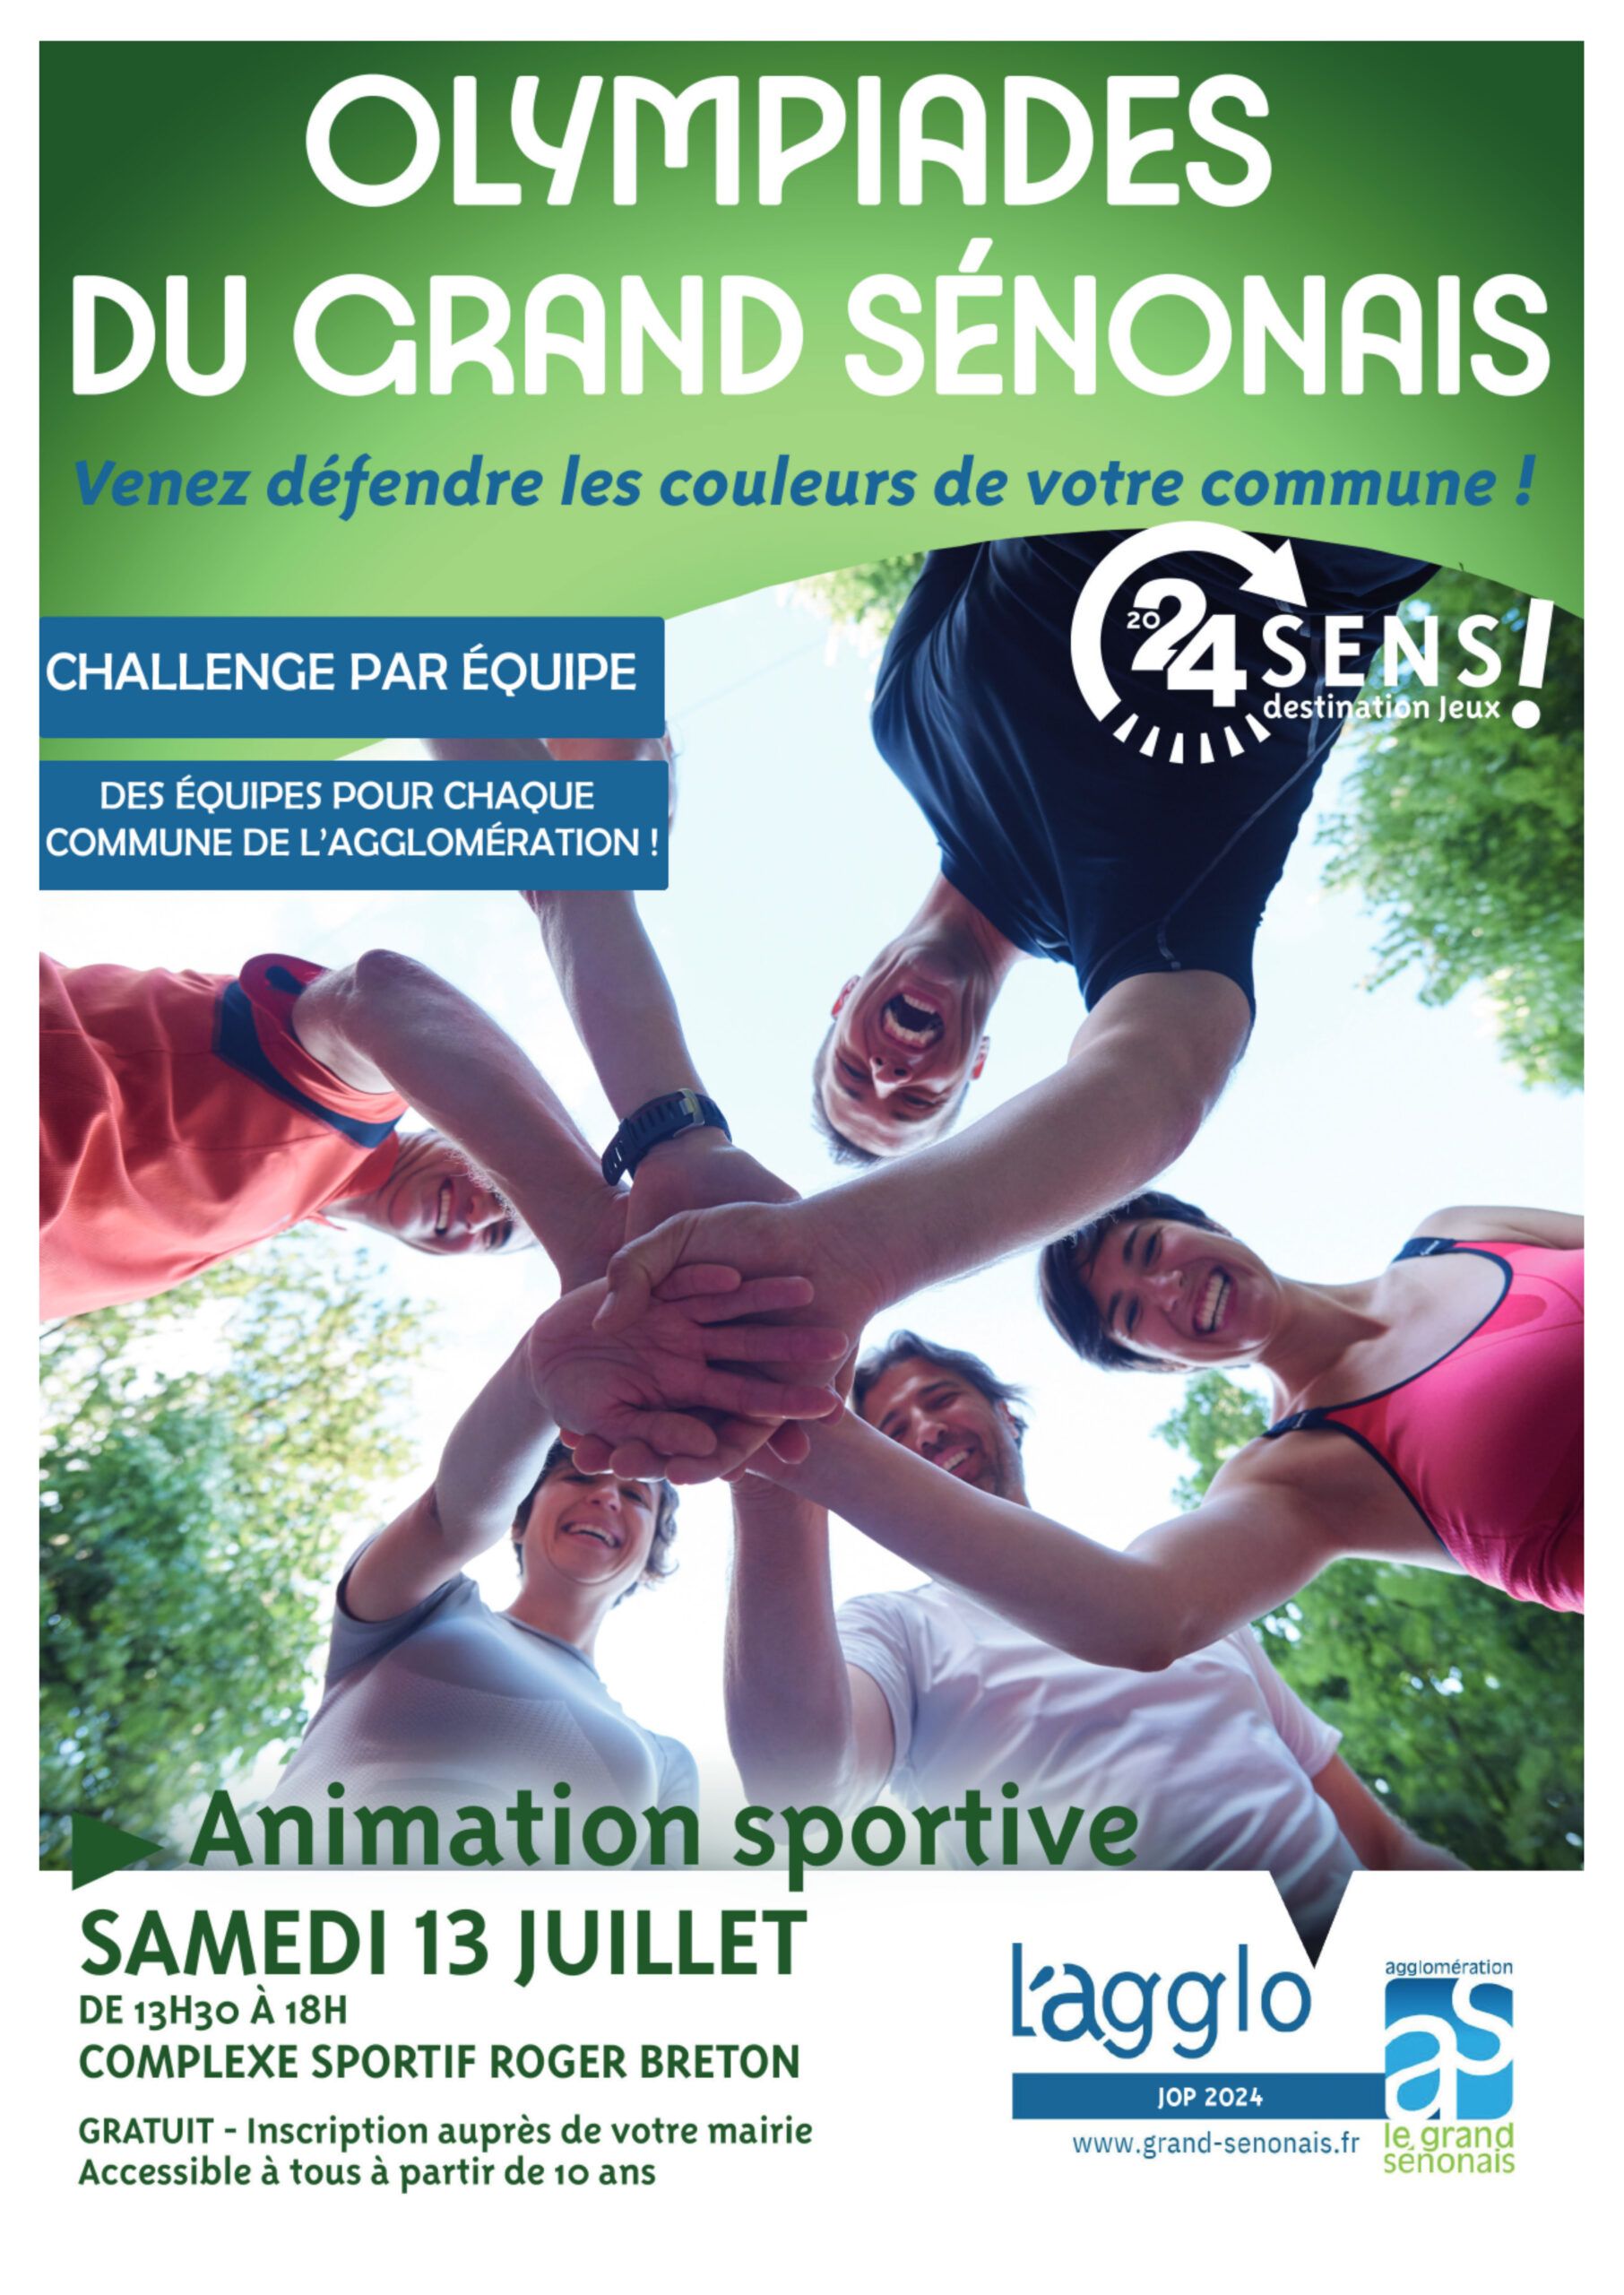 Olympiades du Grand Sénonais : inscrivez-vous !!